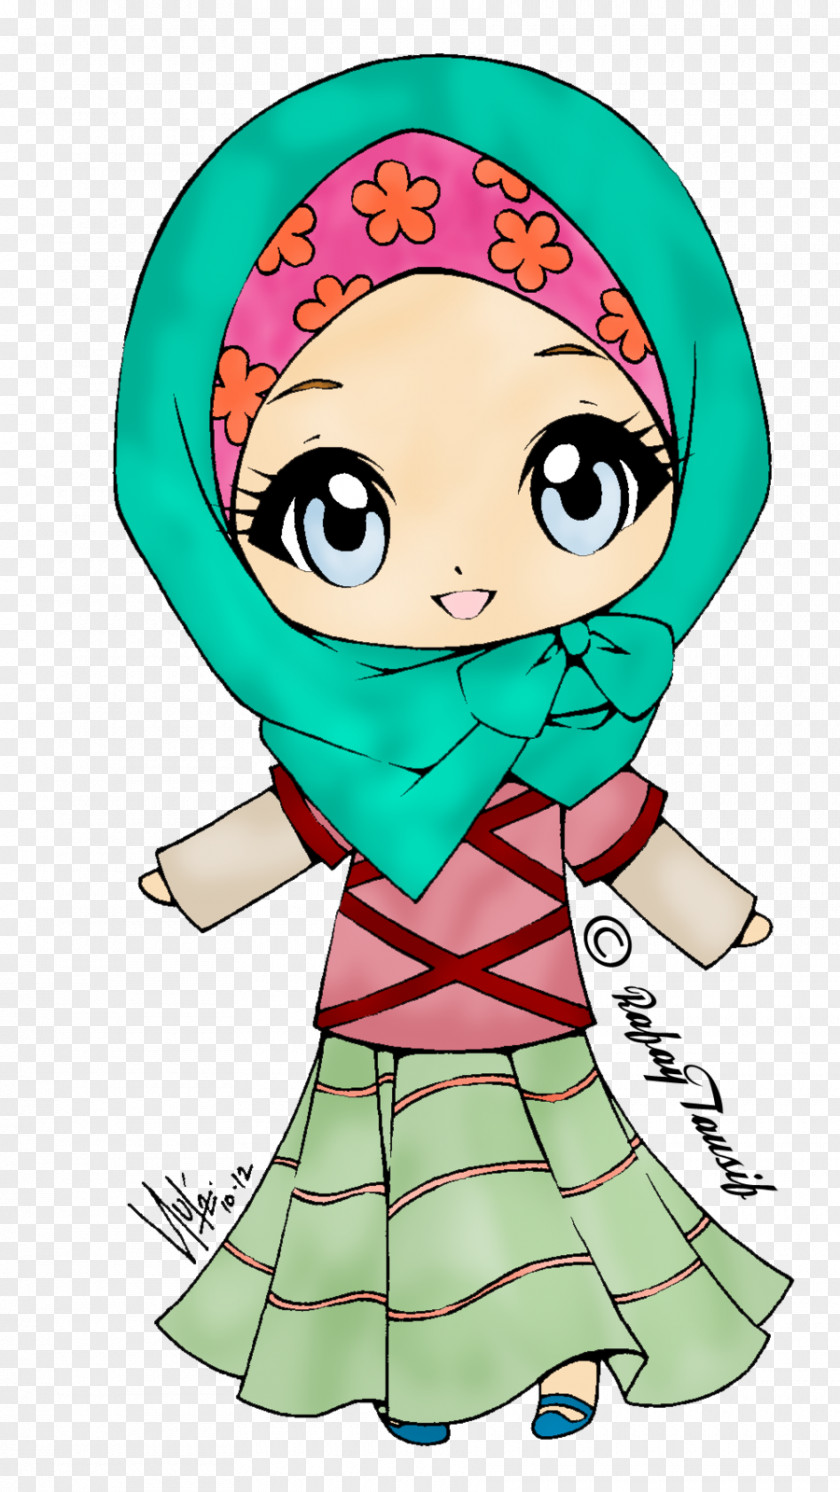 Islam Muslim Girl Hijab PNG , muslim, girl anime character wearing hijab head scarf illustration clipart PNG